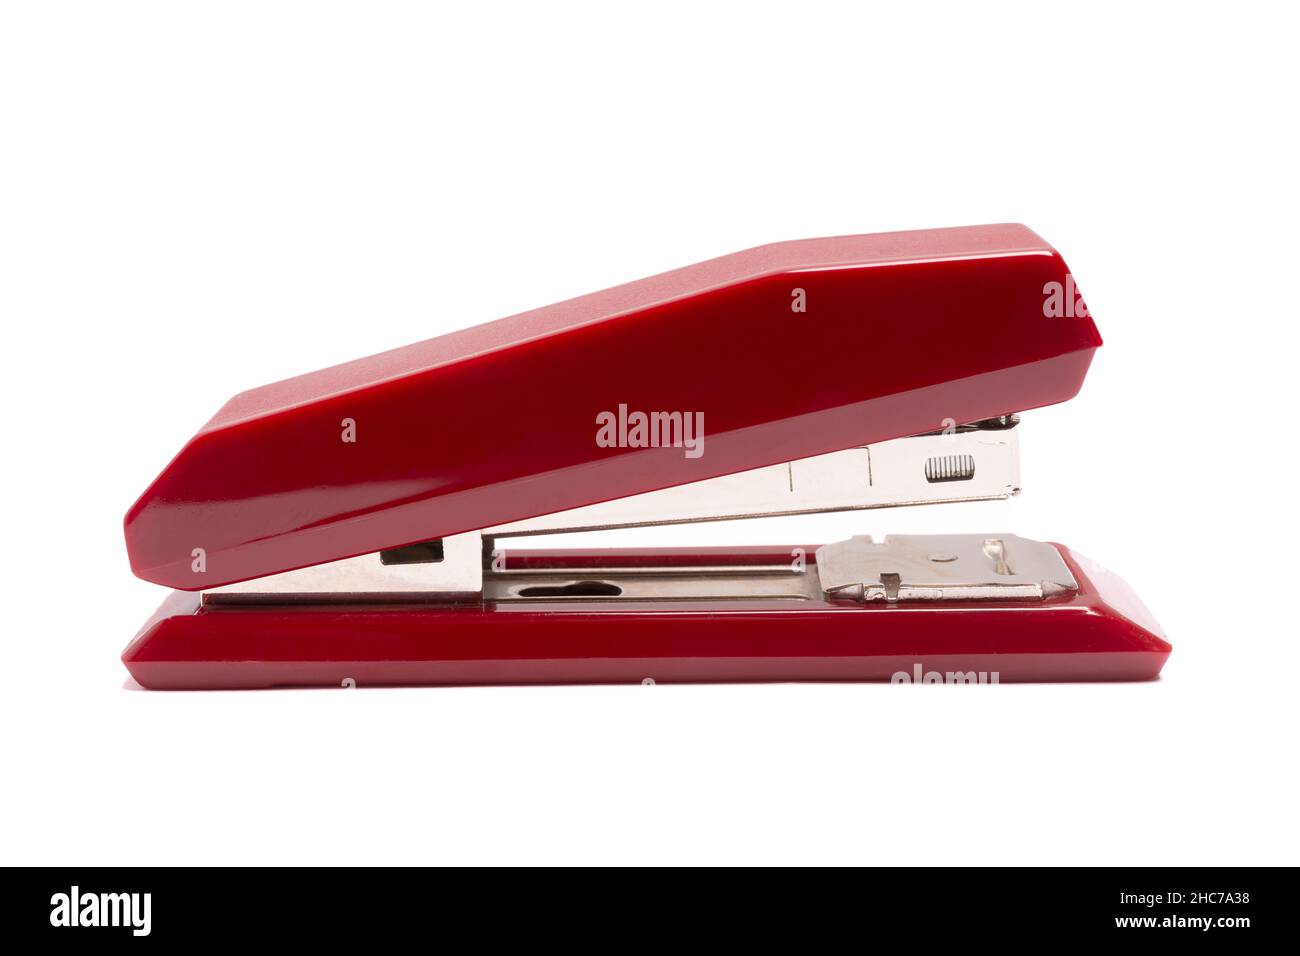 Red stapler isolated on white Stock Photo